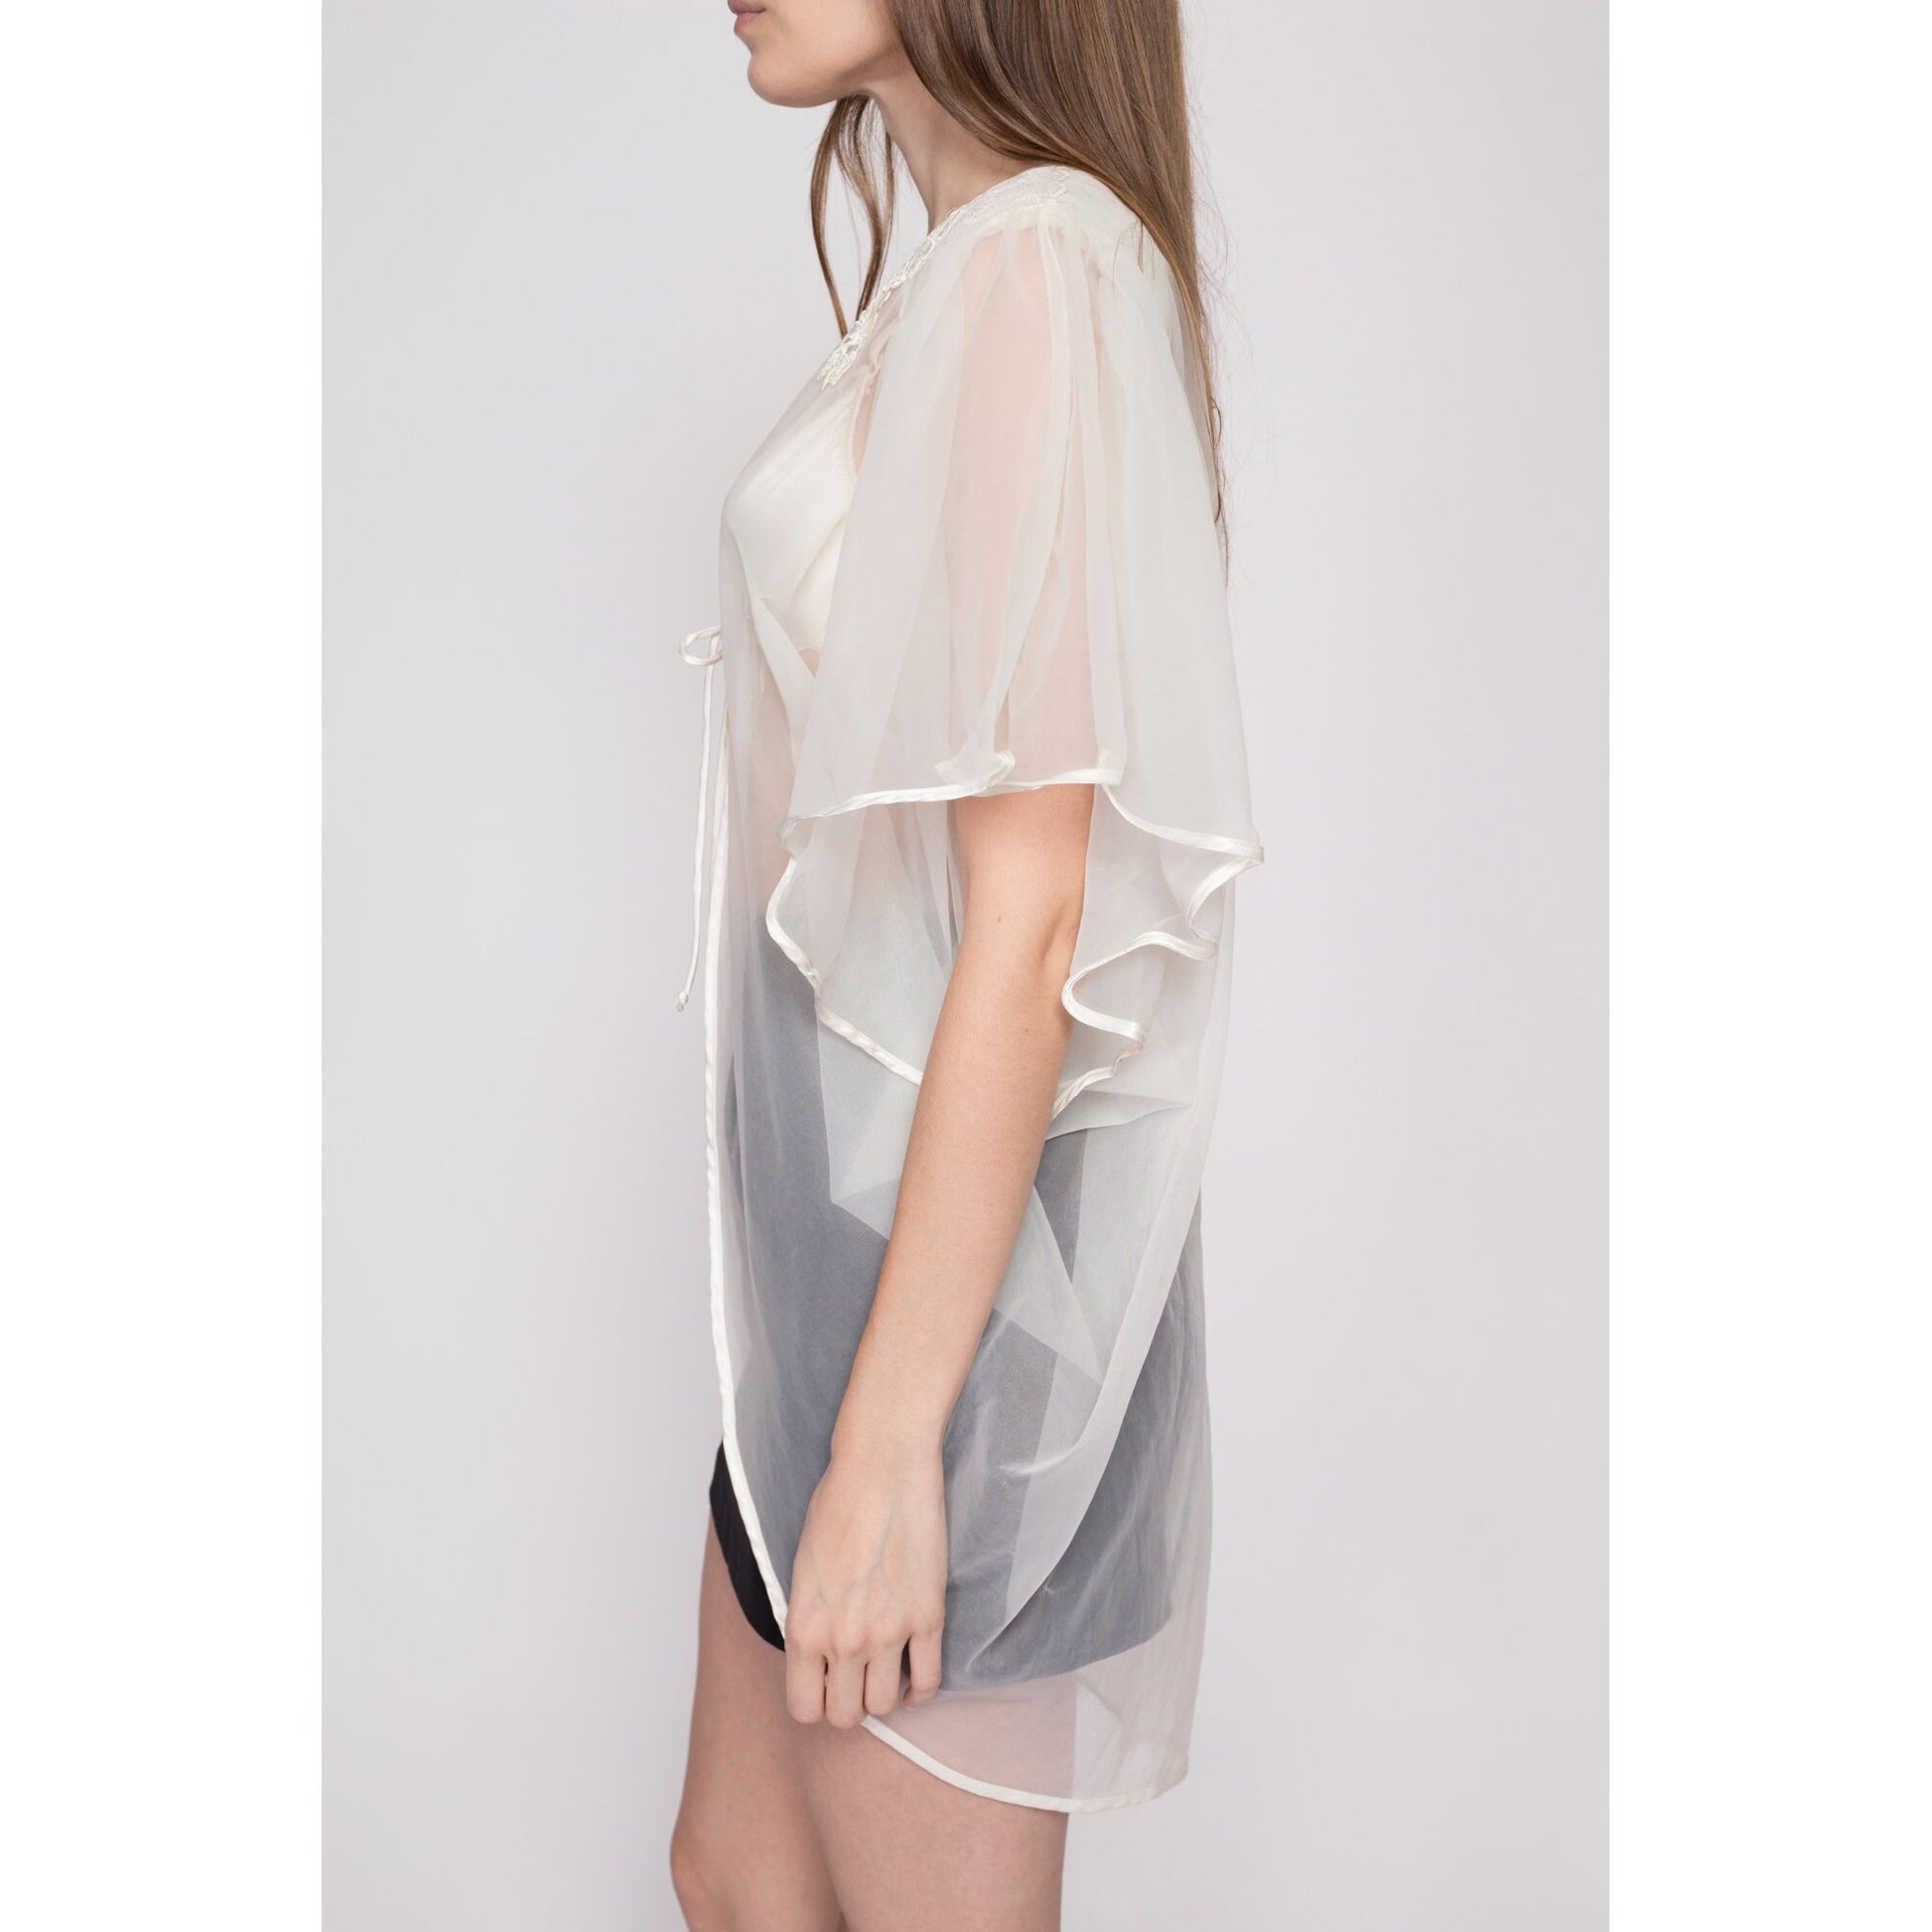 M| 80s Val Mode Sheer White Peignoir - Medium | Vintage Lace Trim Boho Open Fit Loungewear Lingerie Top